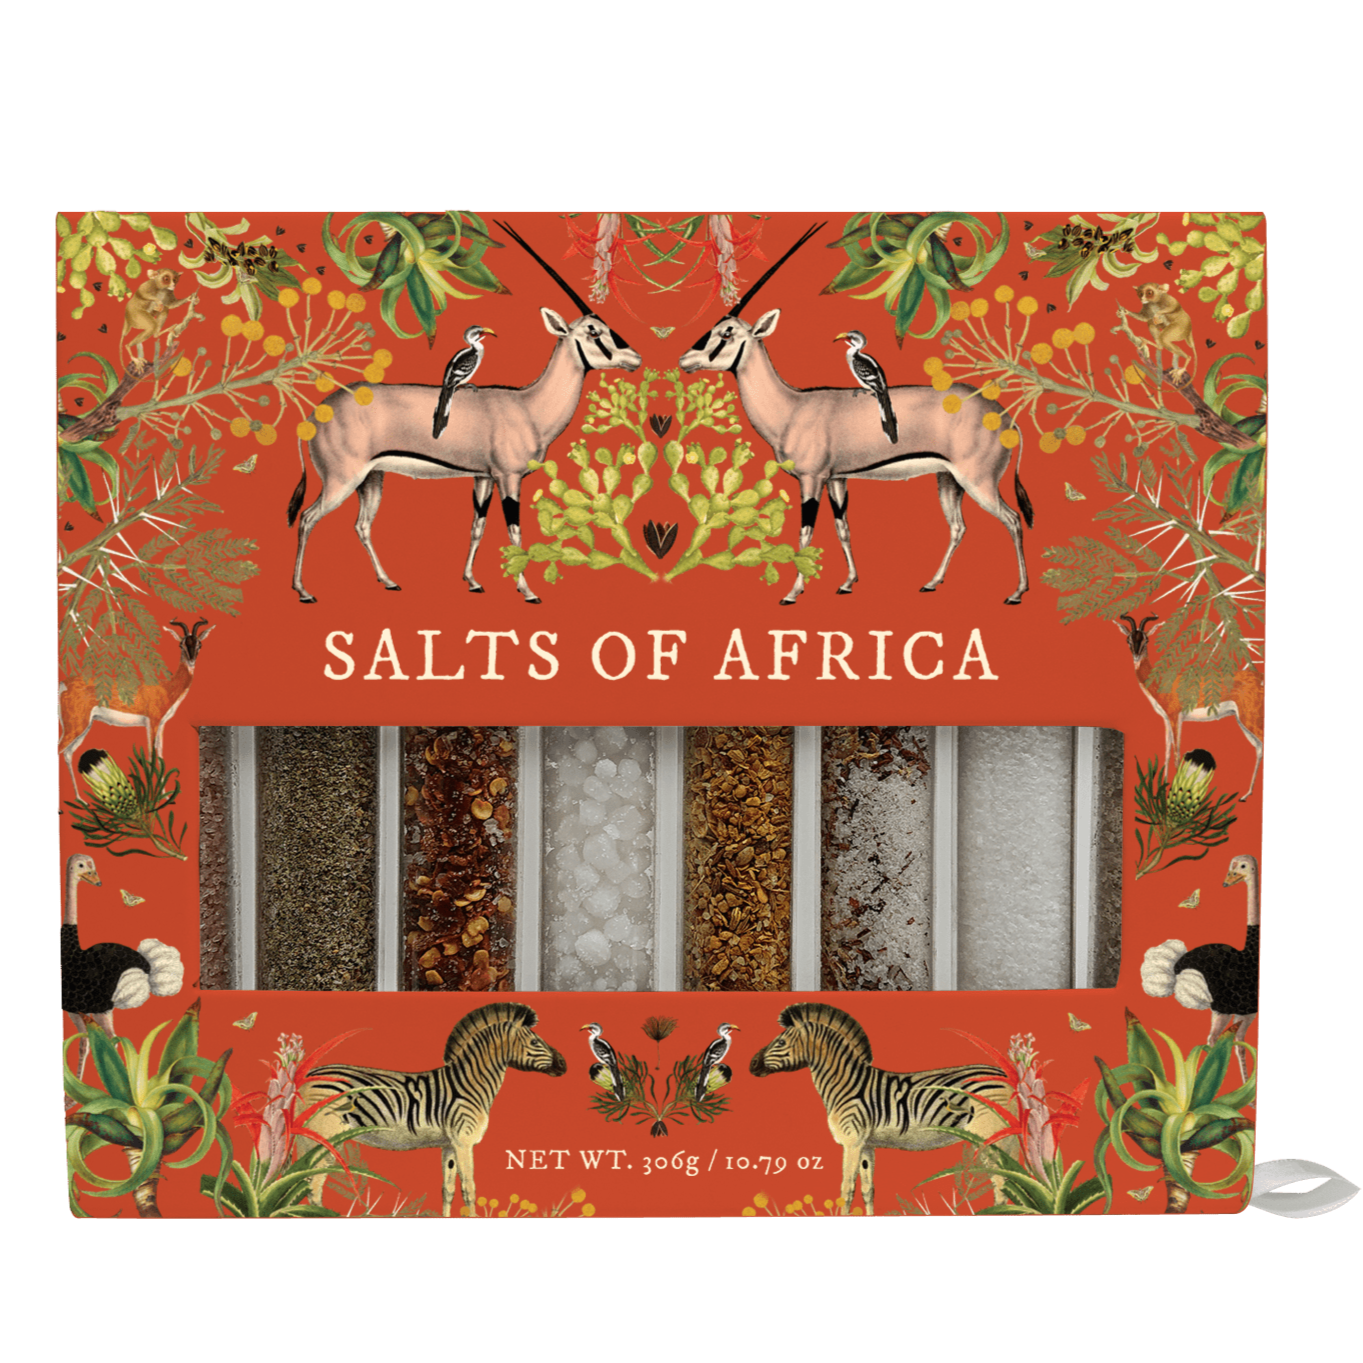 Salts of Africa - Spice Vials CAM - Collaborative Advantage Marketing GFT-SOA01 Accessories & Gift